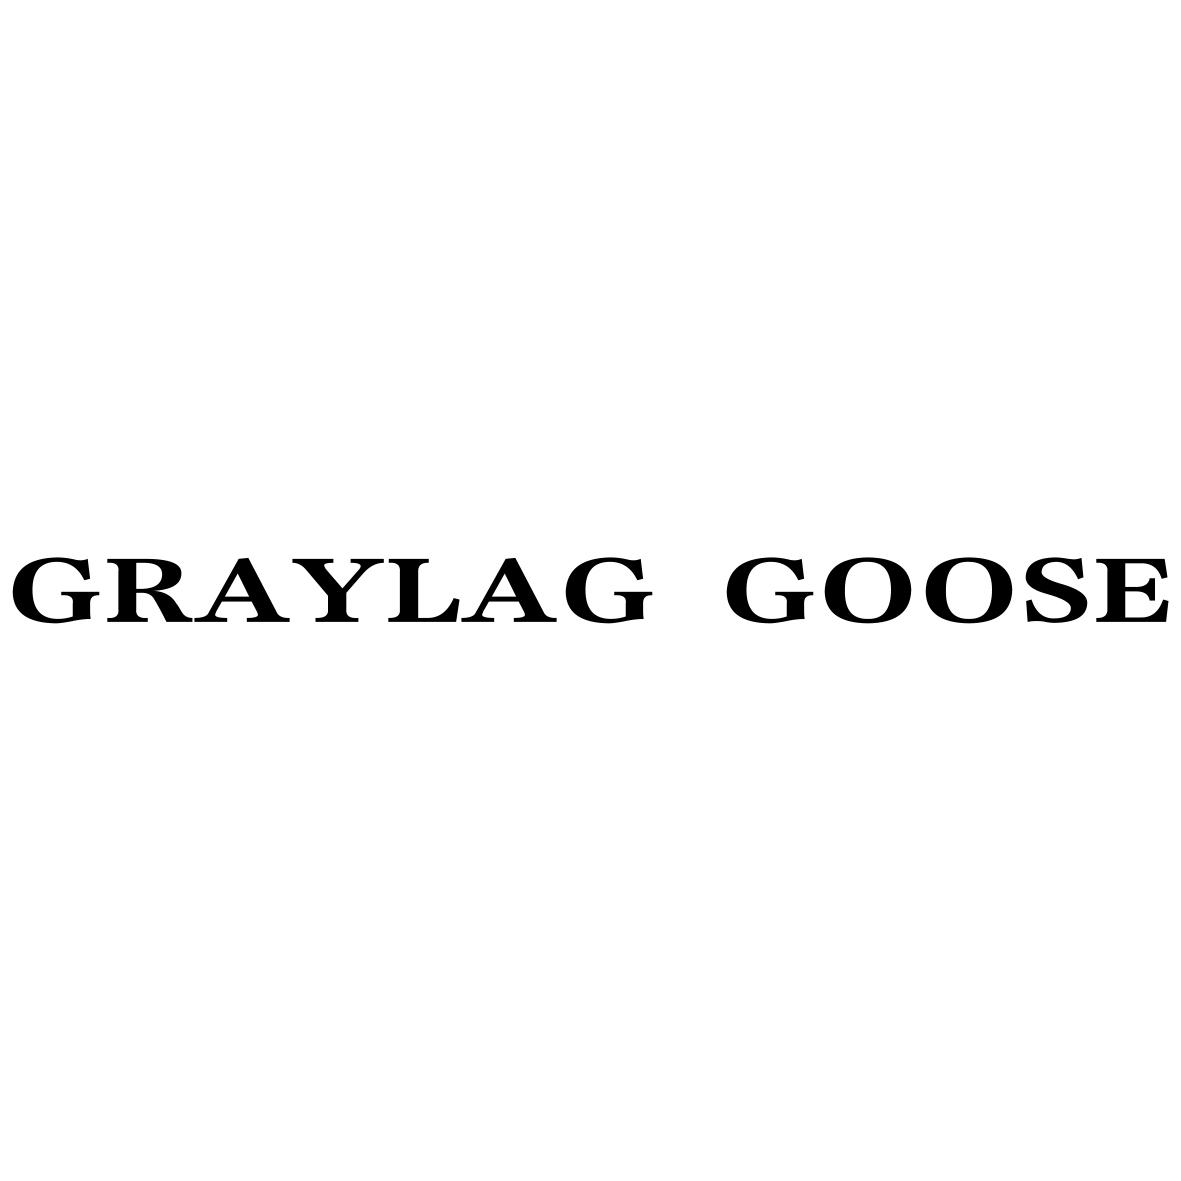 GRAYLAG GOOSE